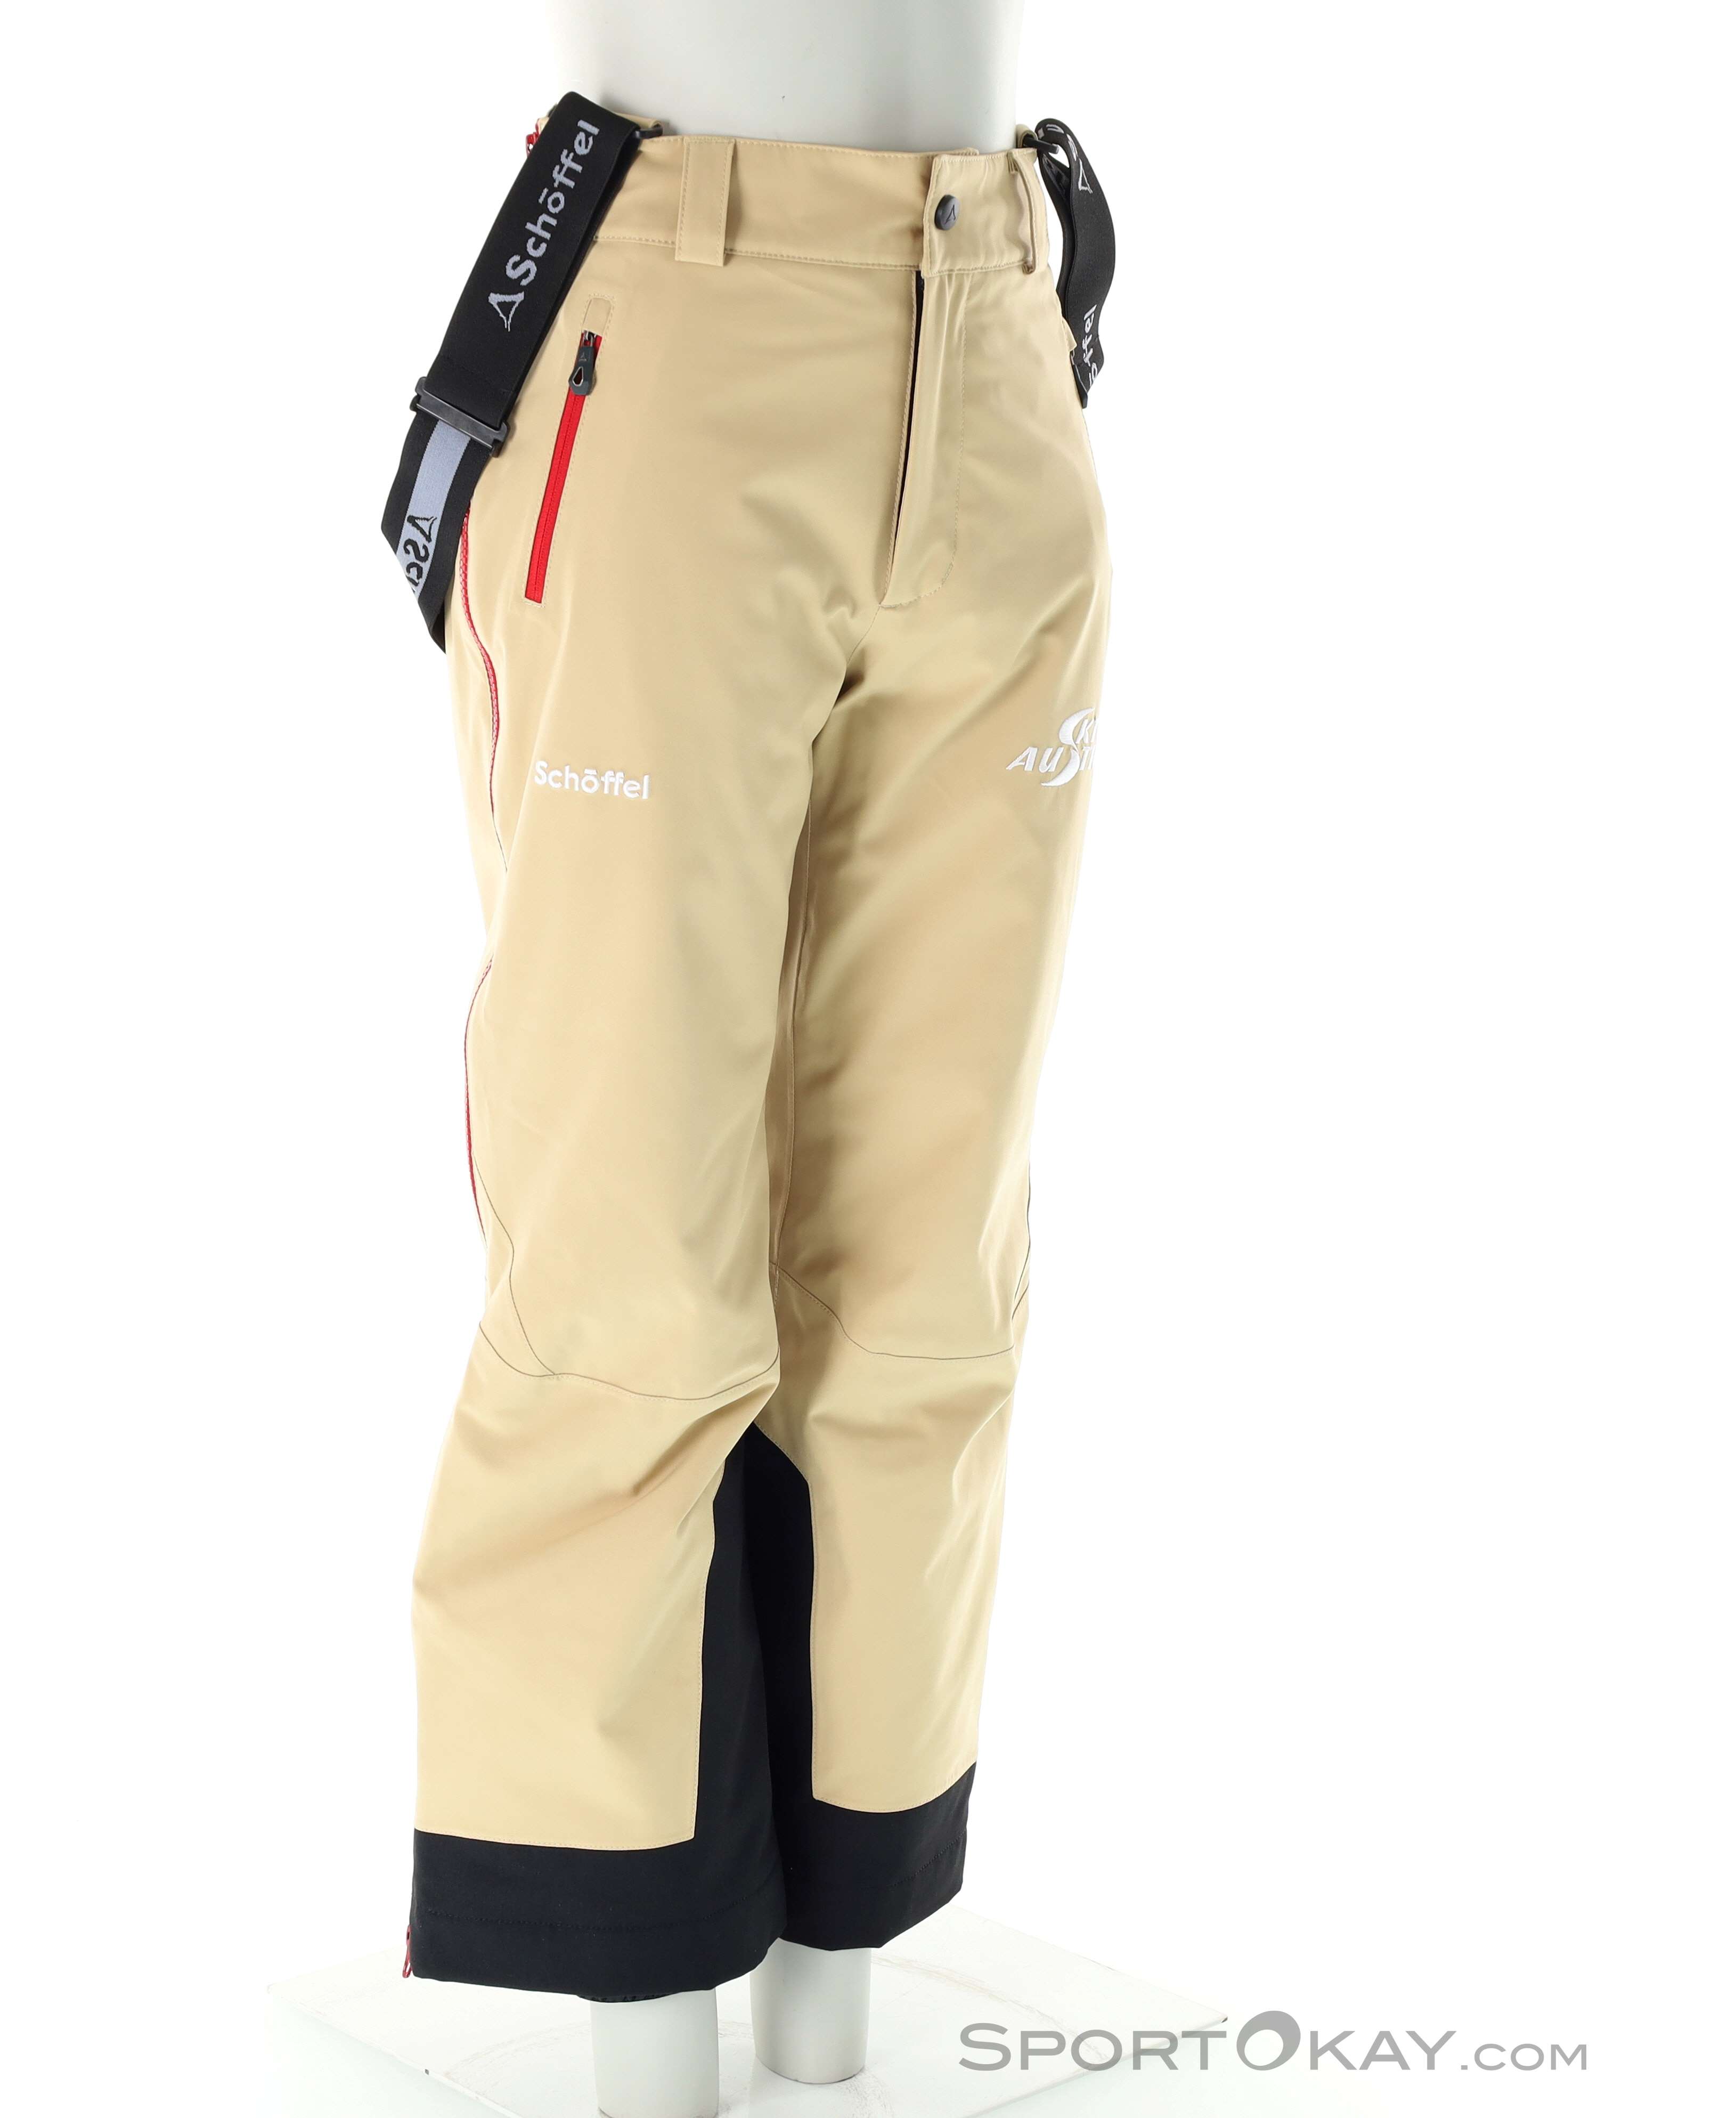 Schöffel Stretchpants Zip 1 RT Kids Ski Pants - Ski Pants - Ski Clothing -  Ski & Freeride - All